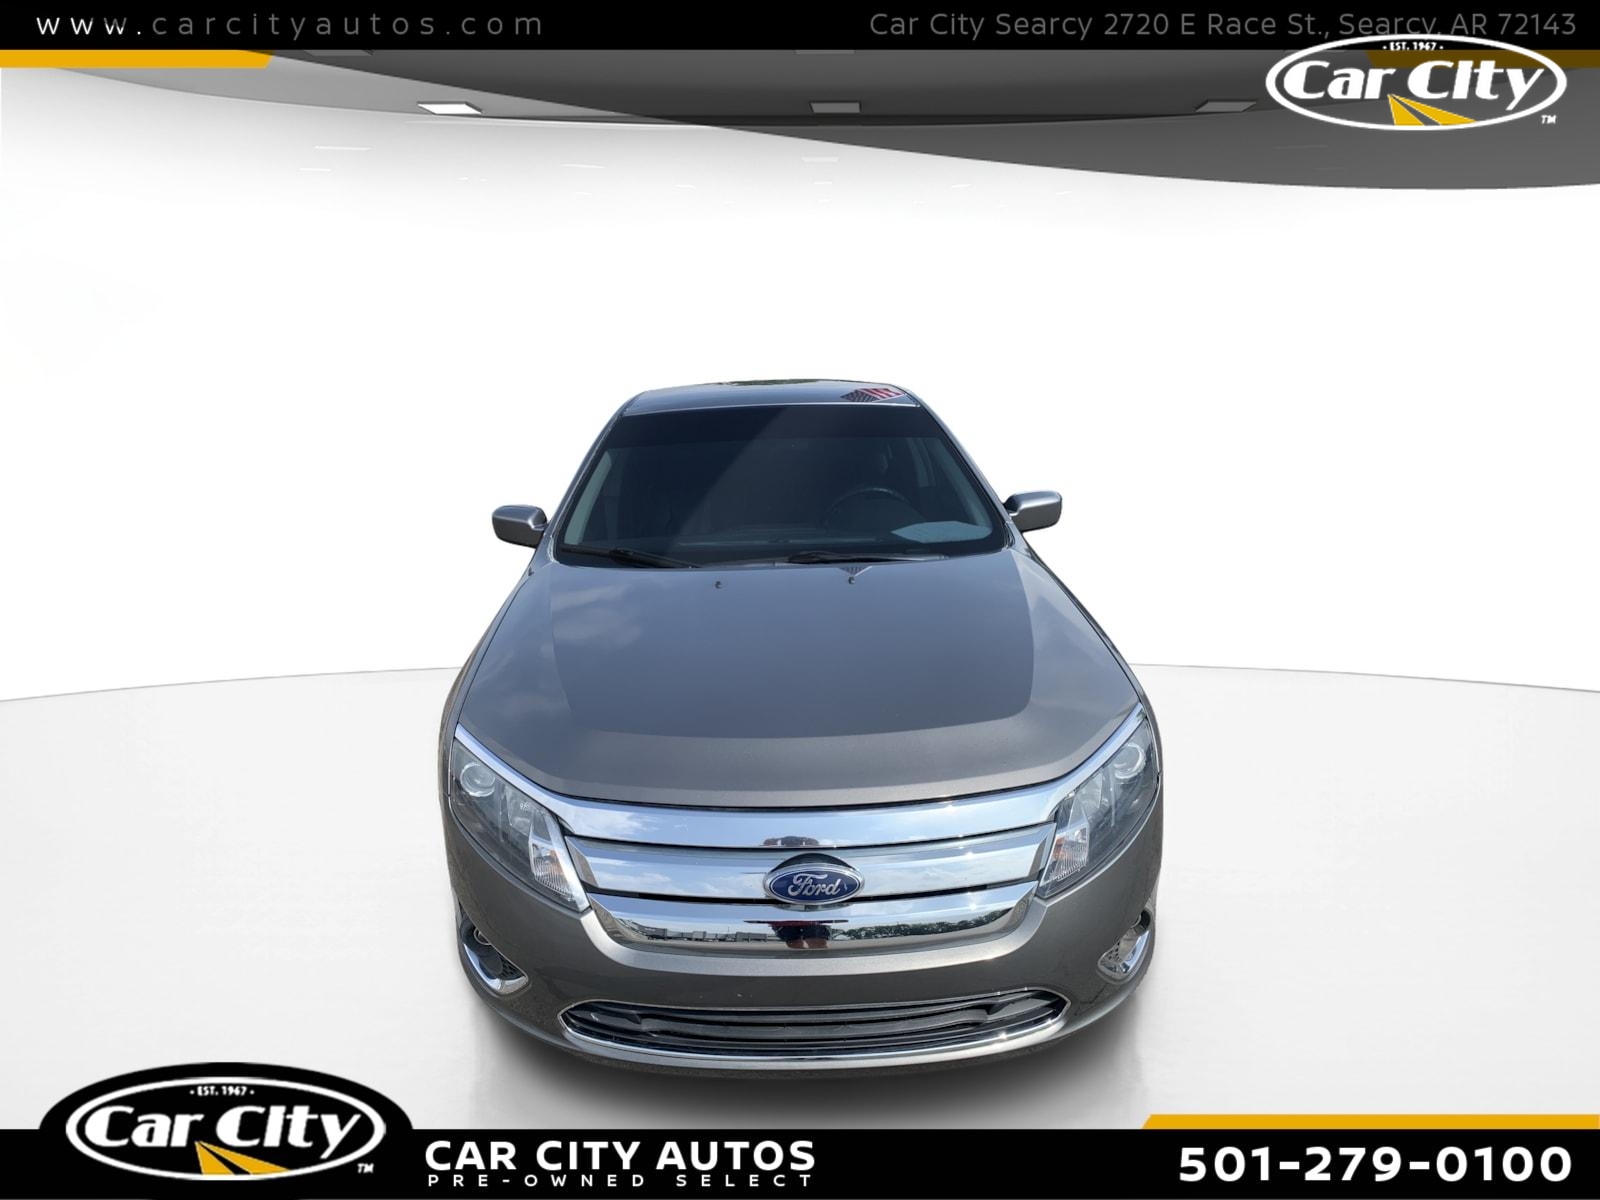 2011 Ford Fusion SEL  - BR321403  - Car City Autos